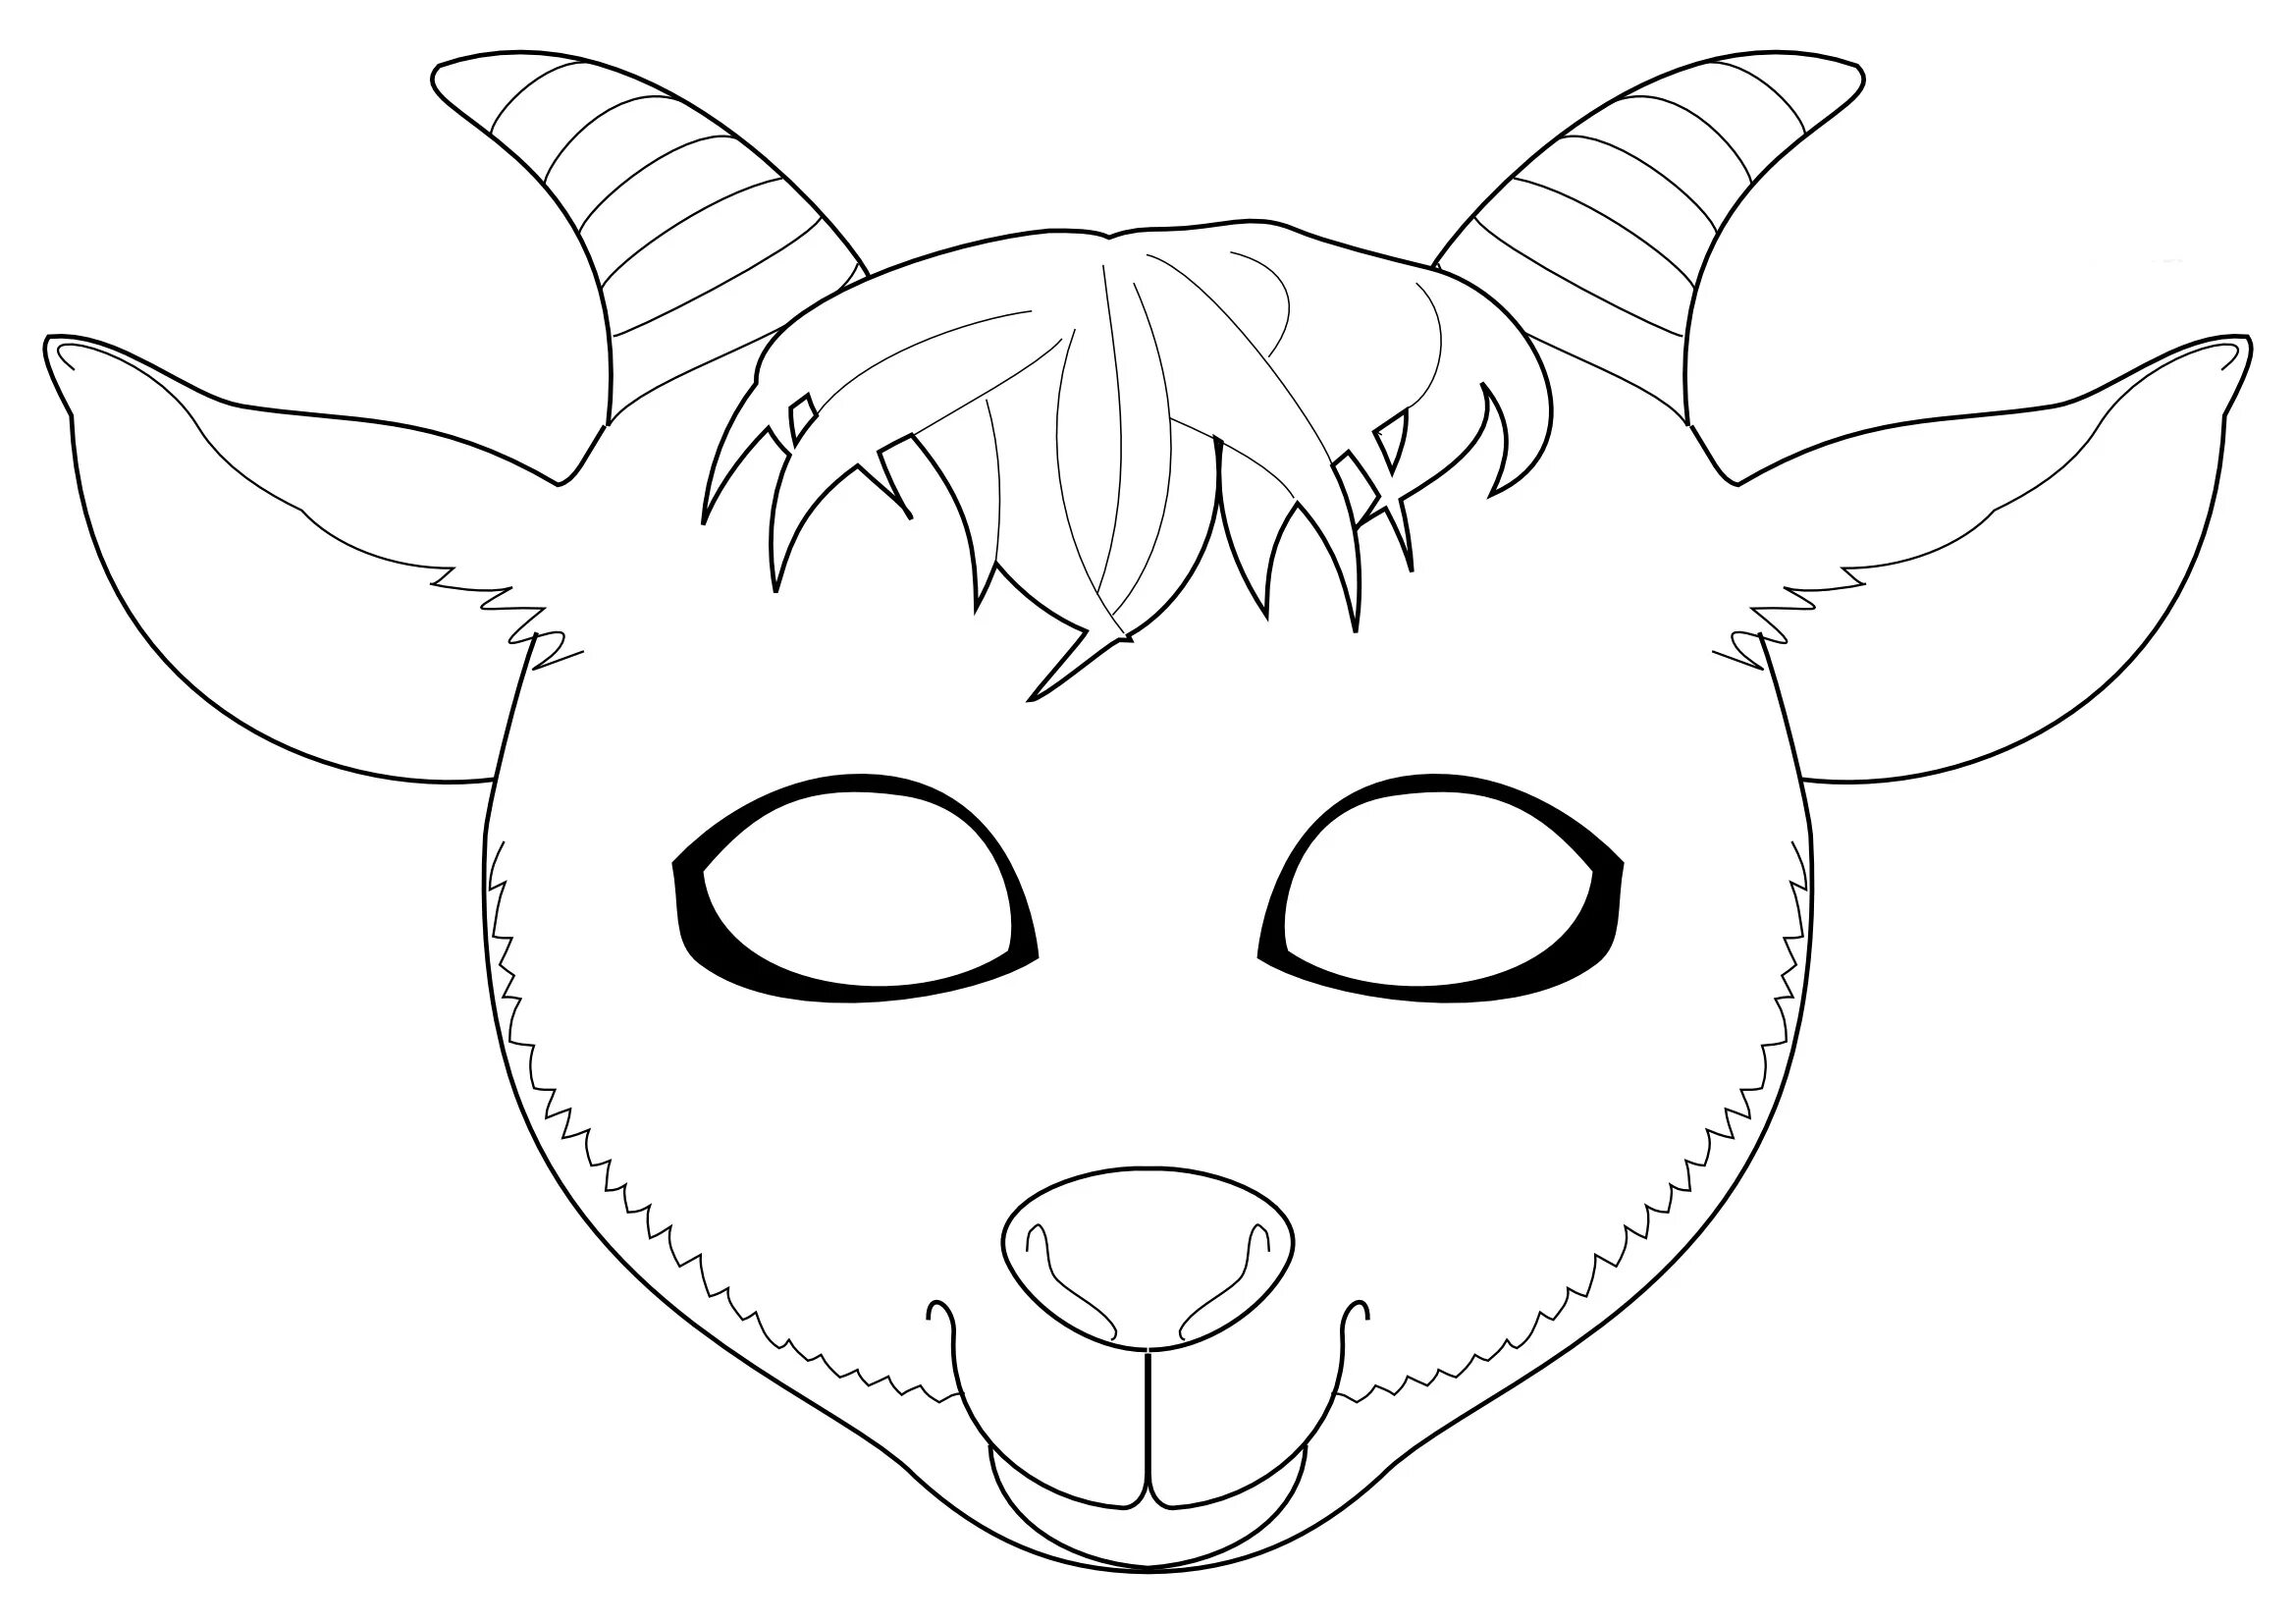 Goat mask #5